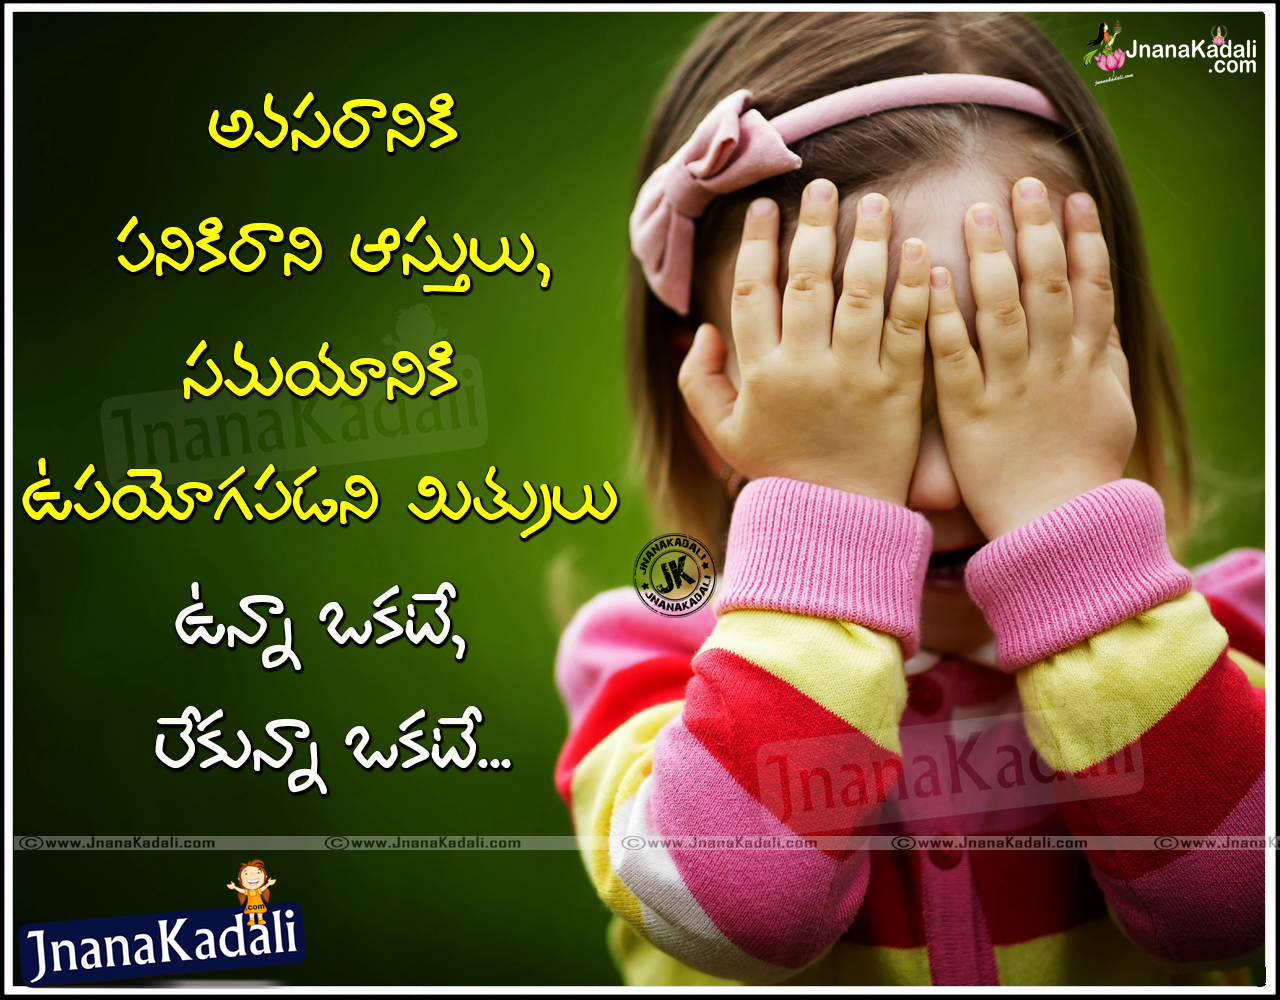 Inspiring Friendship Never Change Quotations in Telugu | JNANA ...